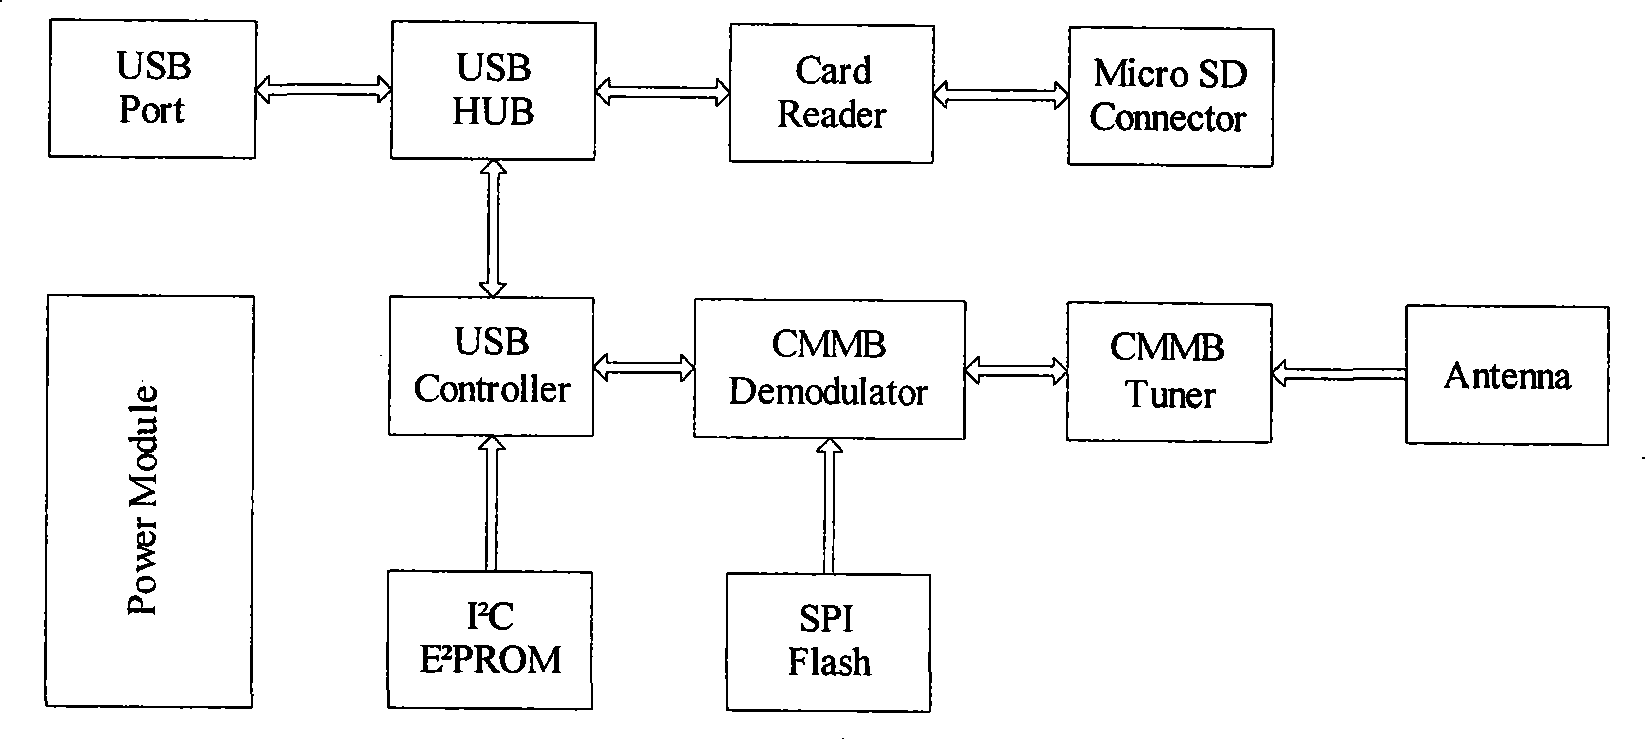 CMMB mobile television rod having Micro SC memory card reader